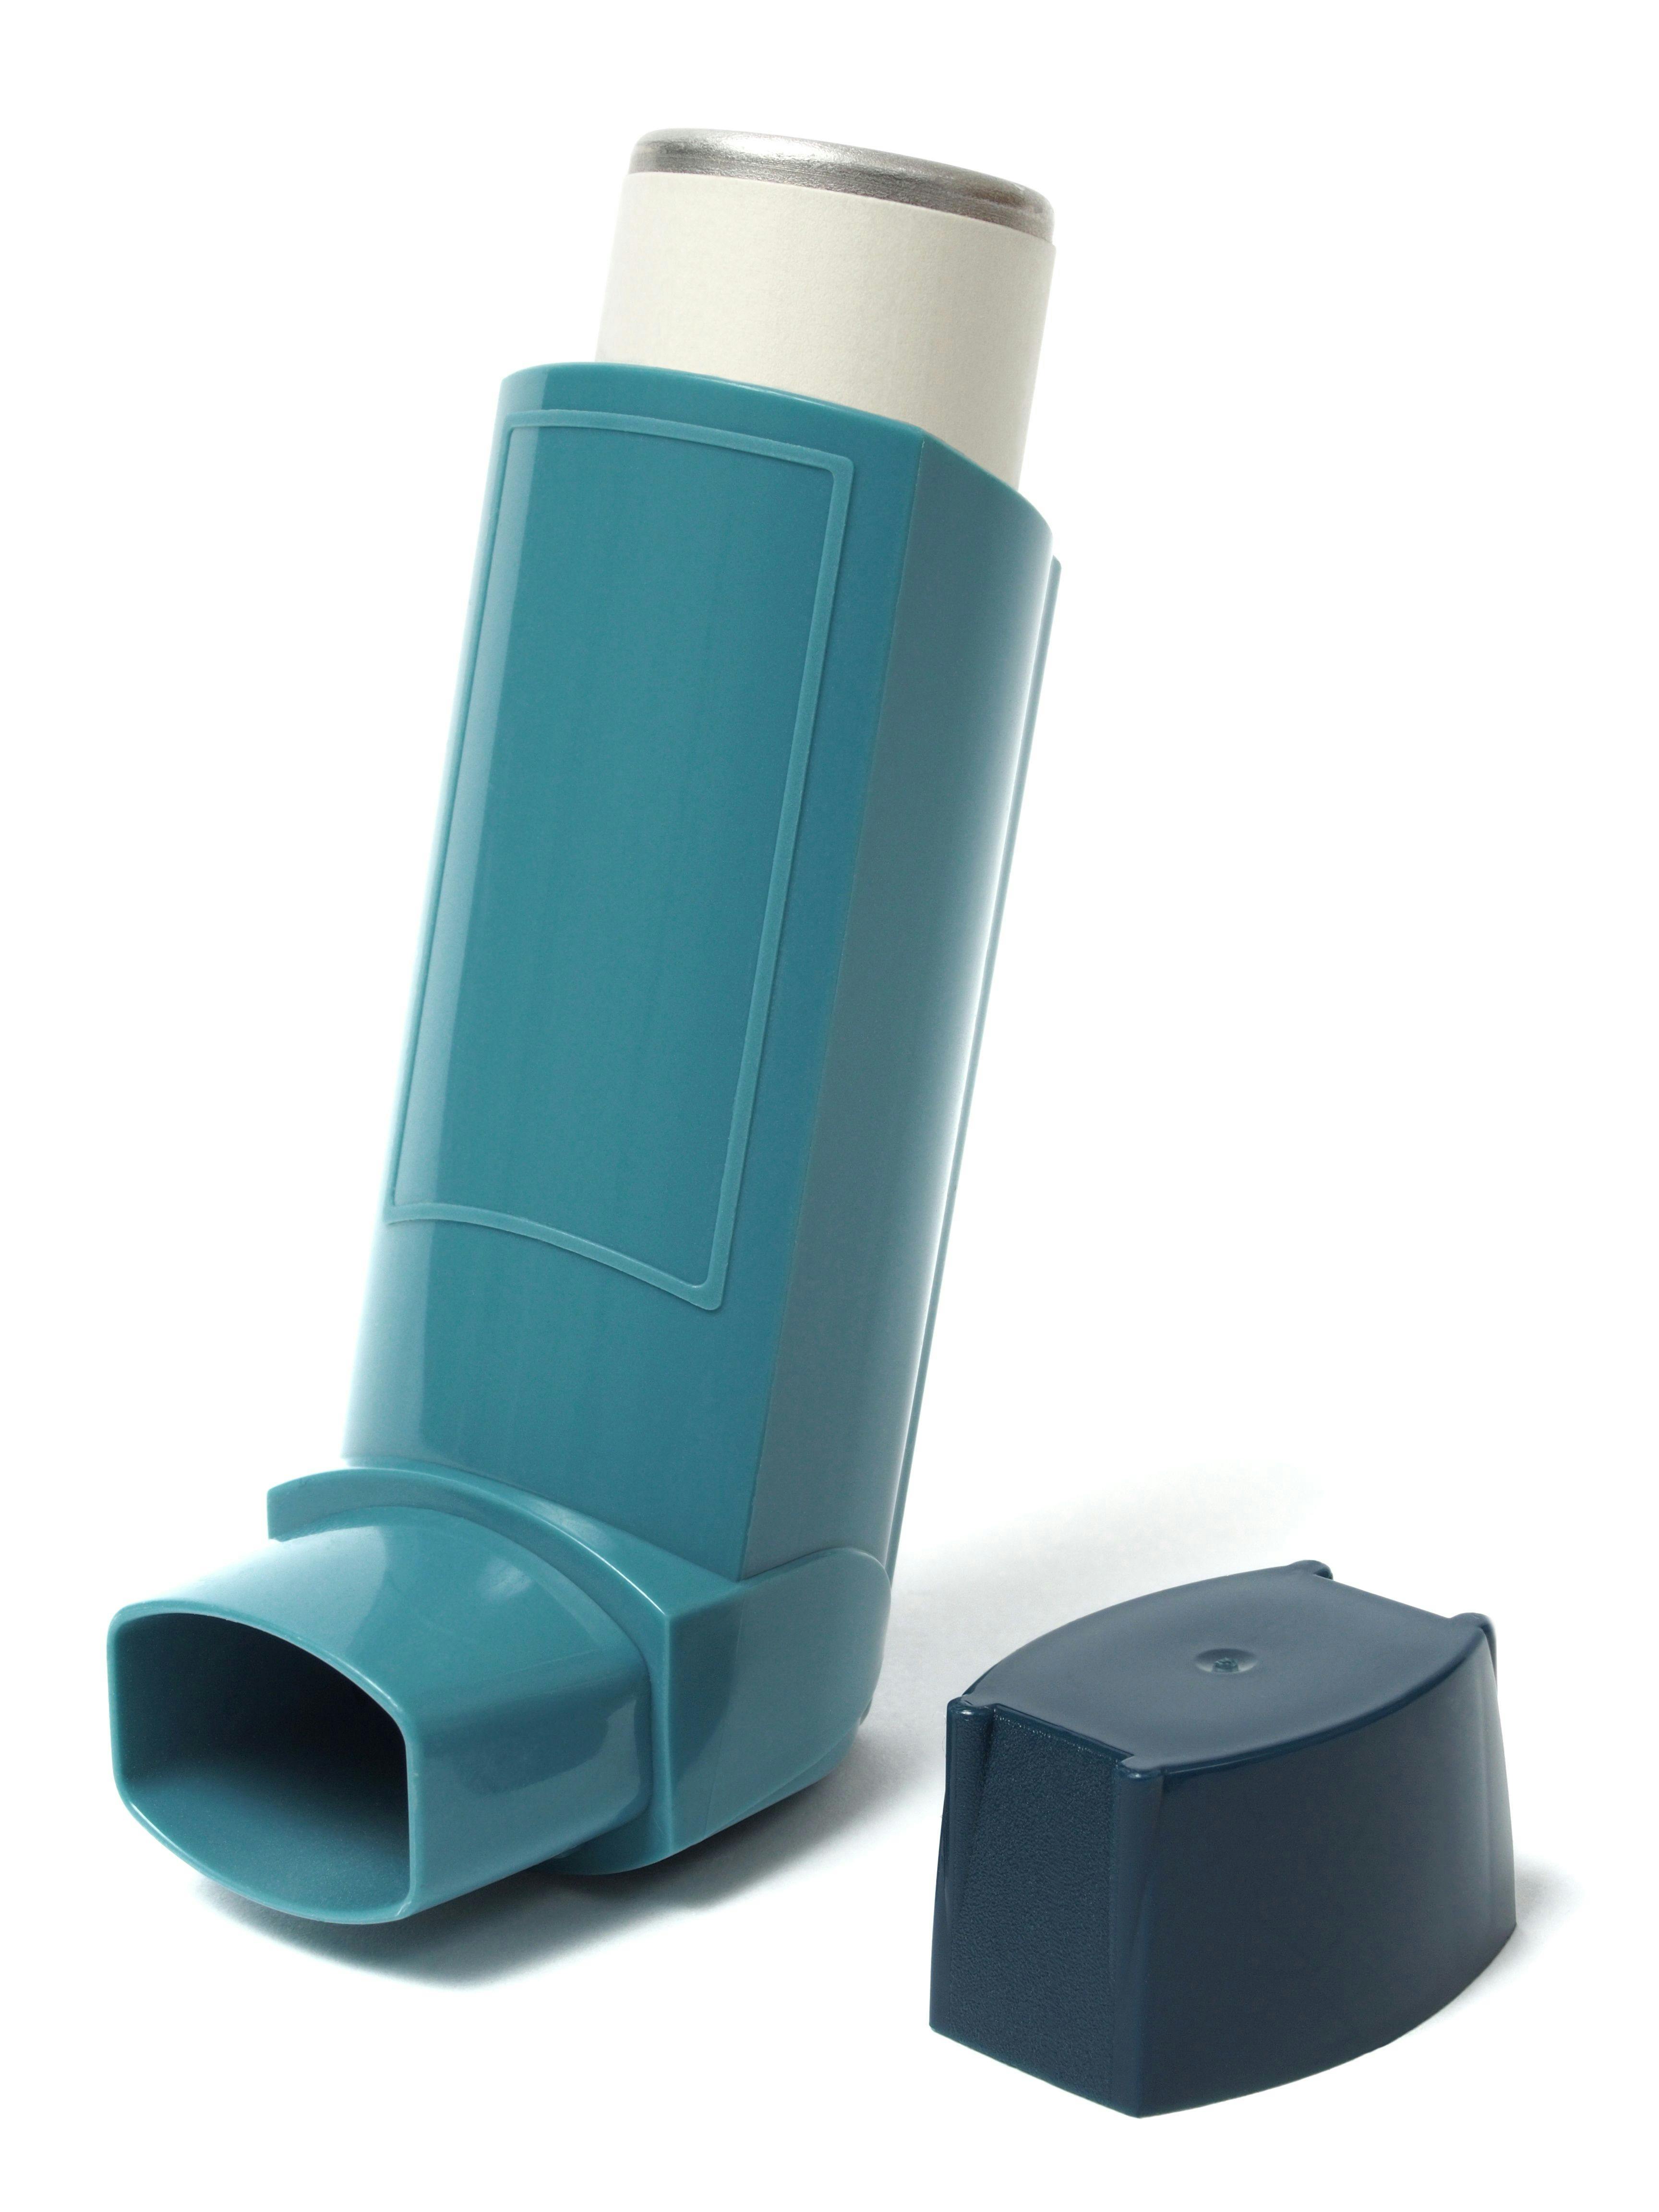 Inhaler | Image Credit: Andrzej Tokarski - stock.adobe.com